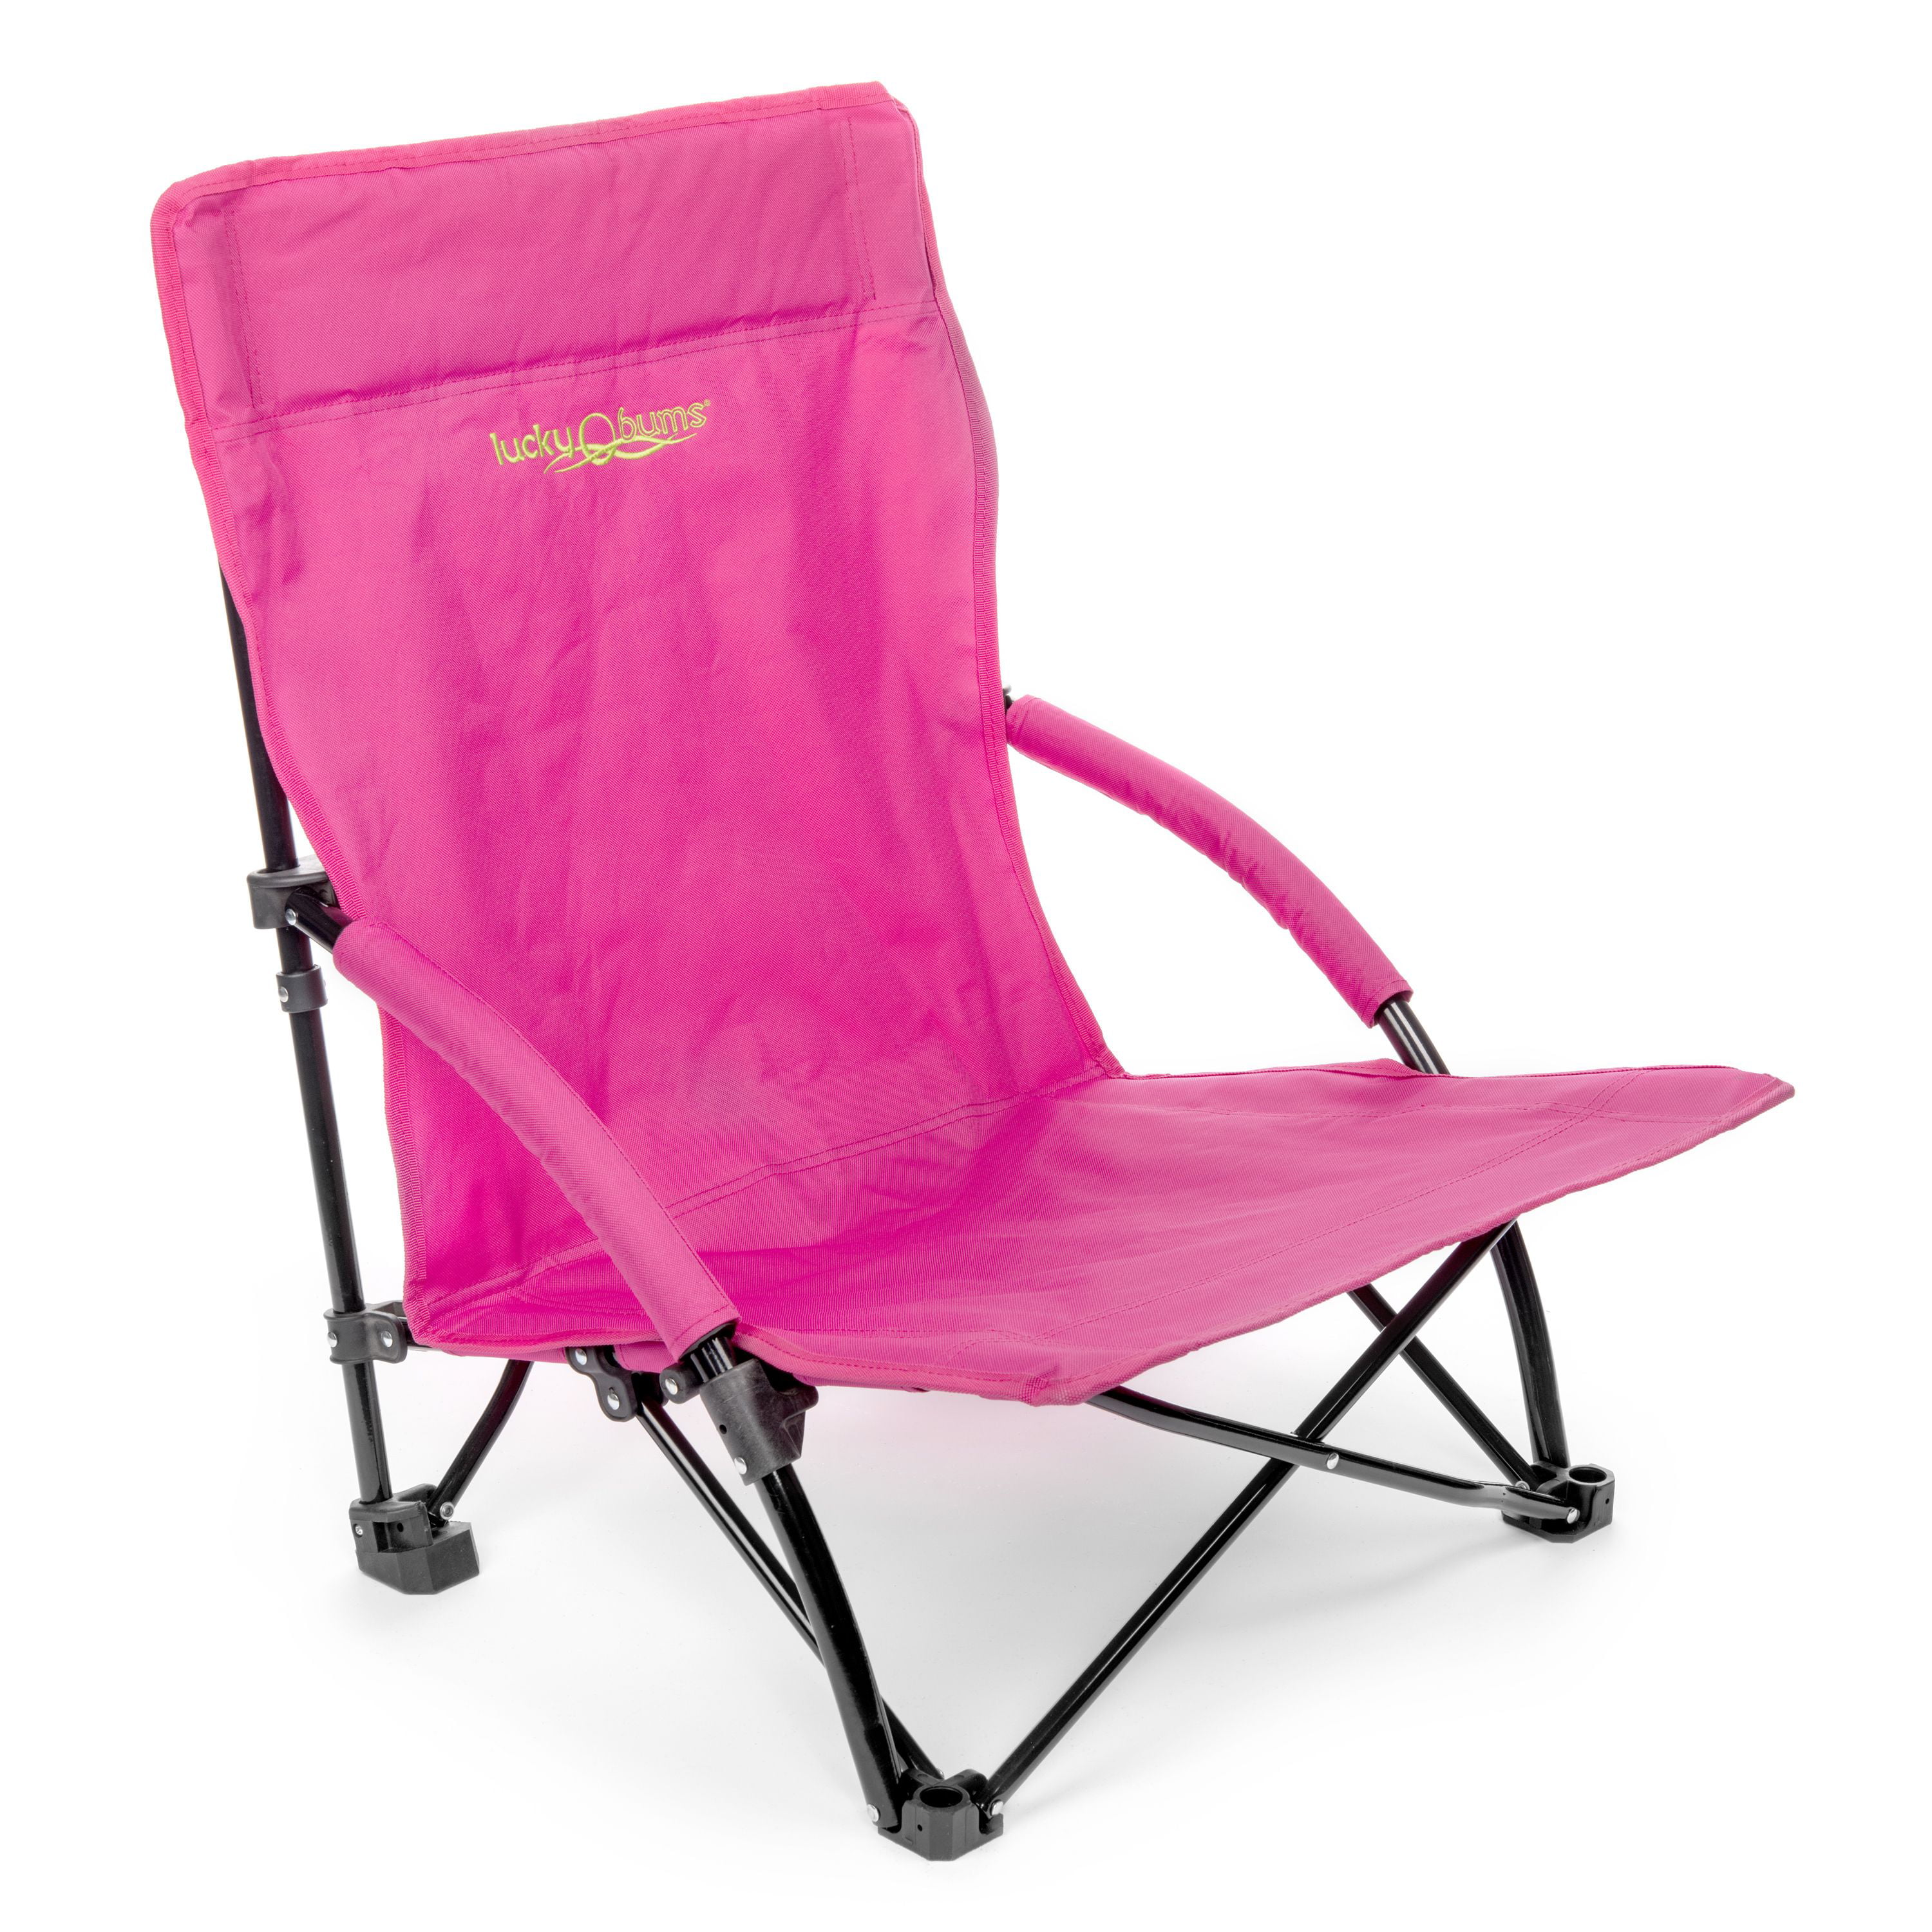 Creatice Low Folding Beach Chair with Simple Decor